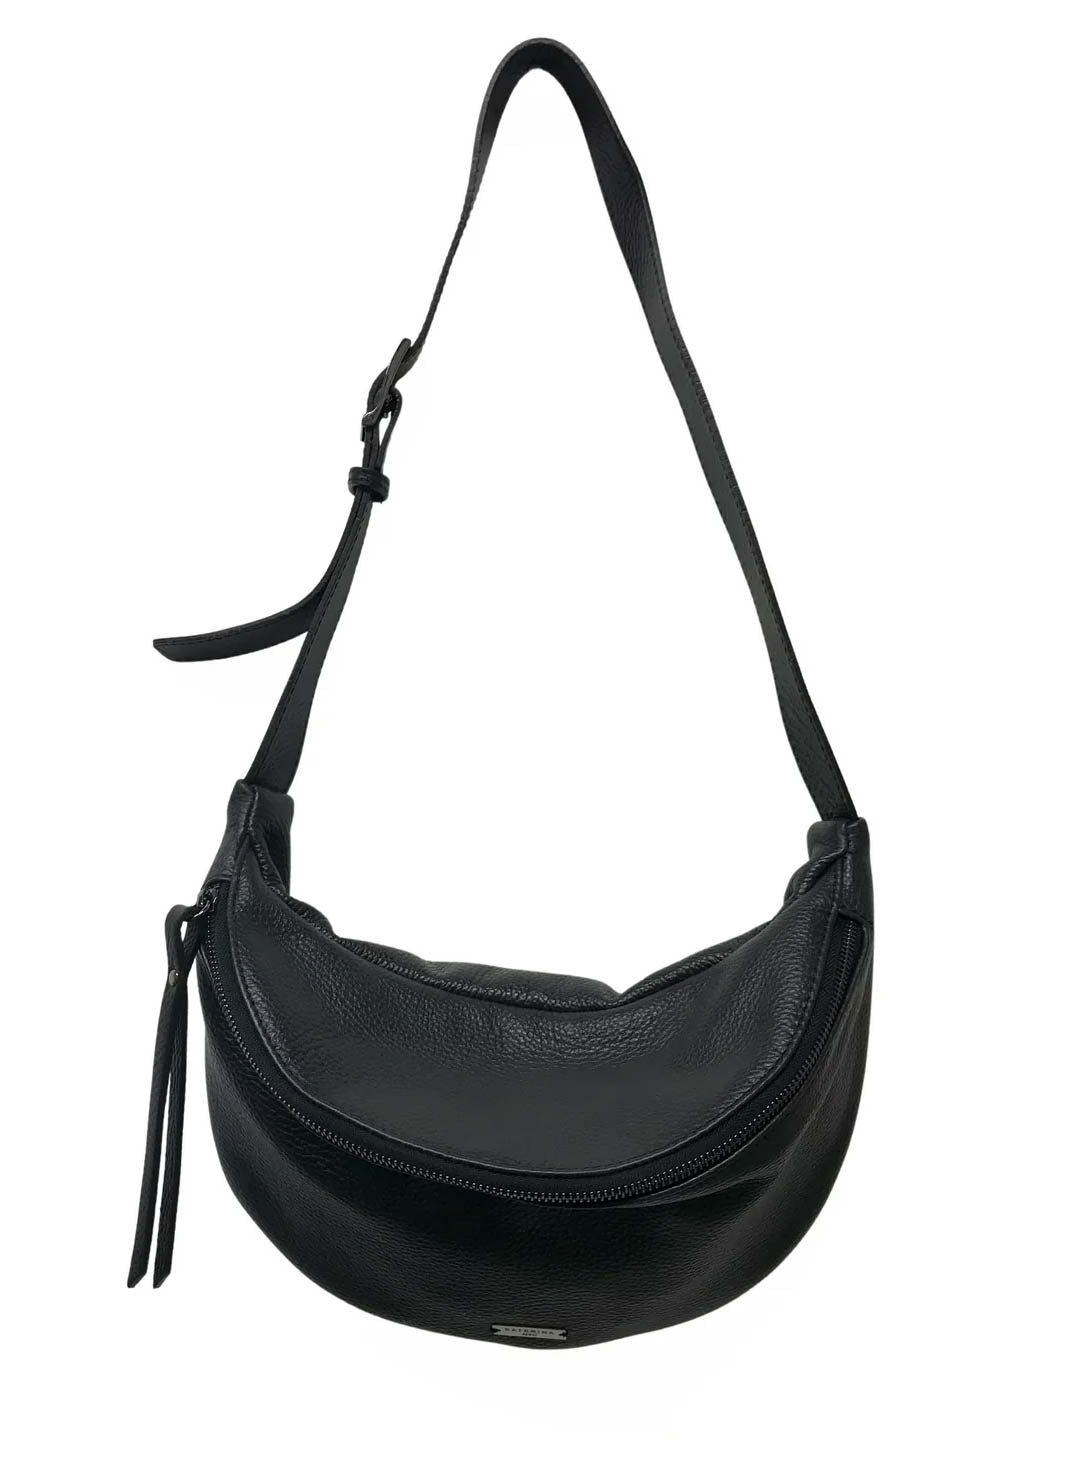 Katerina NYC - Leather Sling Bag - Black - Meg